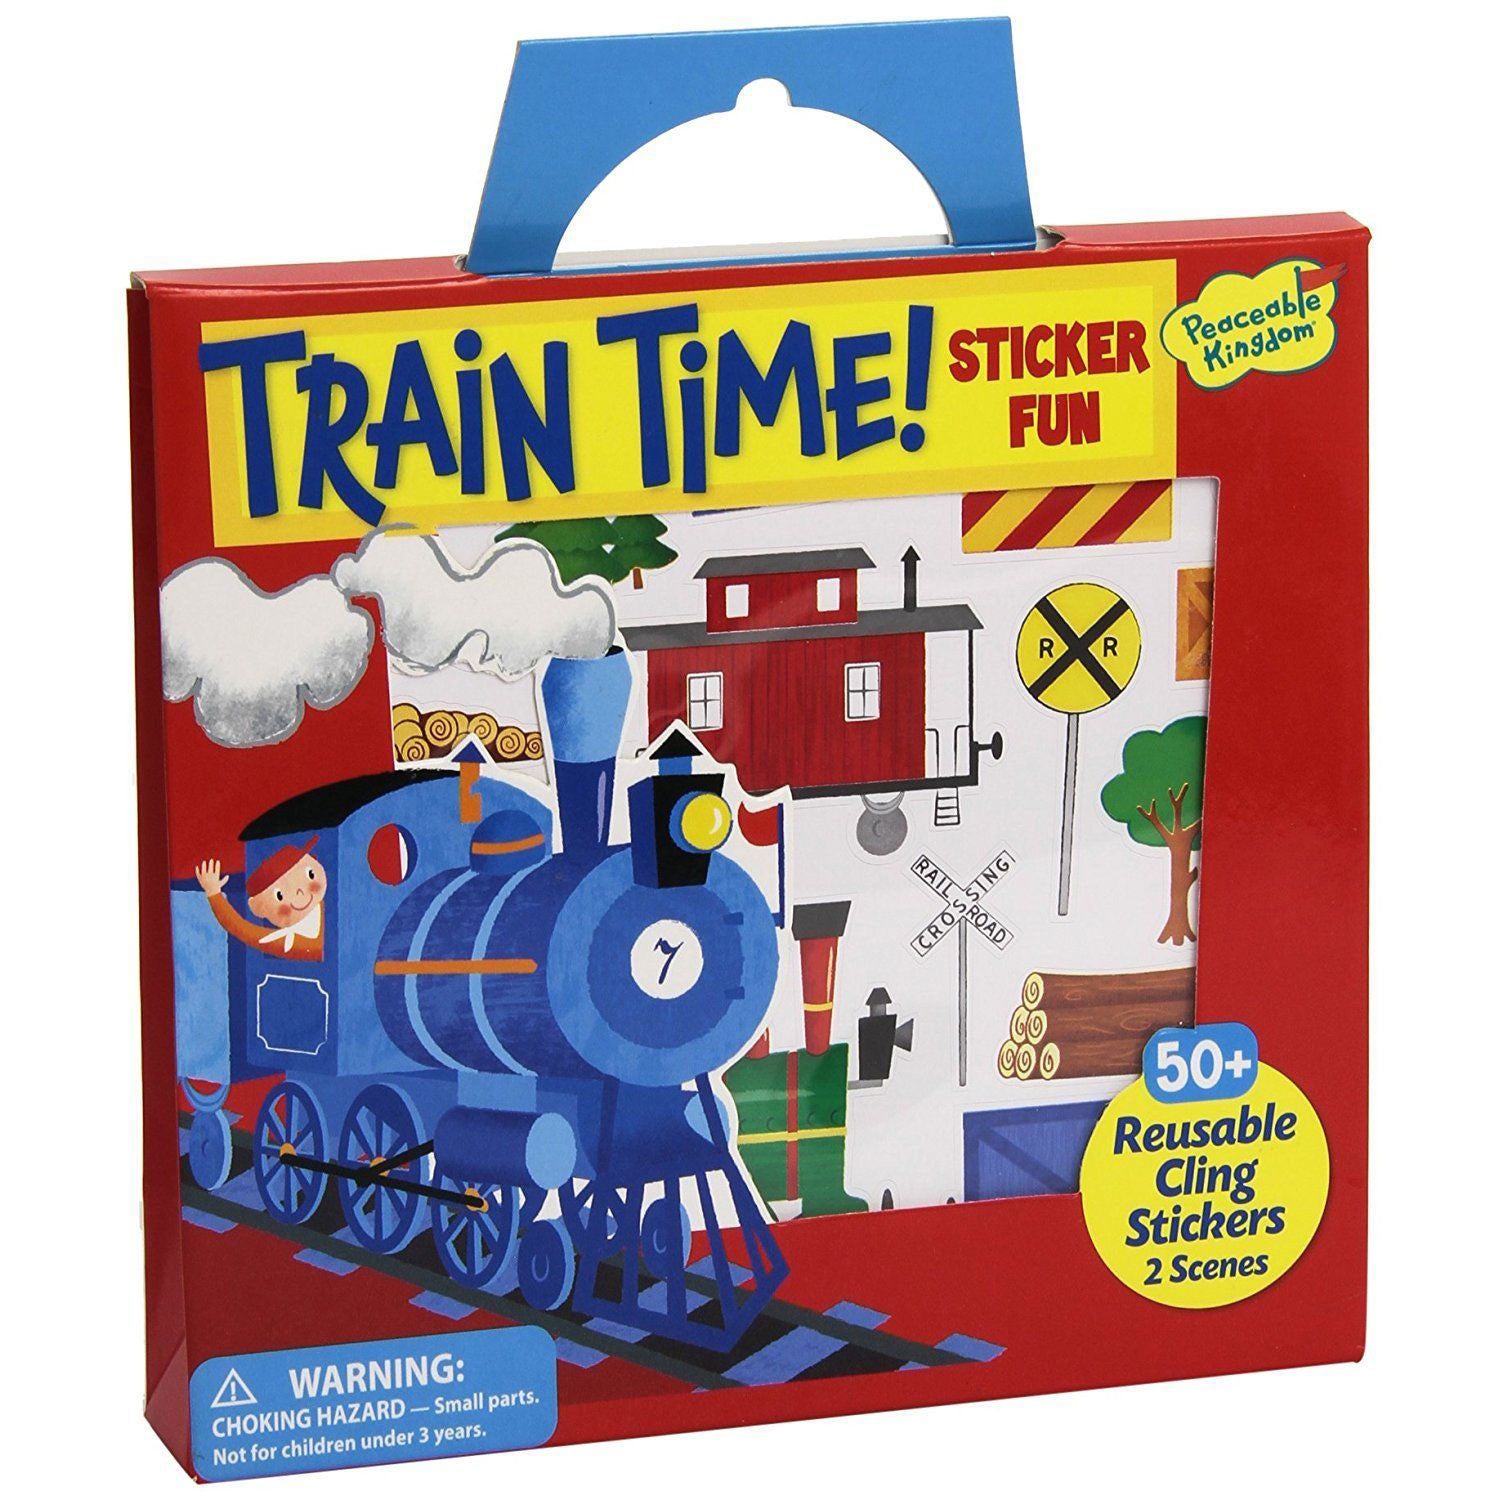 Boys' Train Time Sticker Fun by Peaceable Kingdom